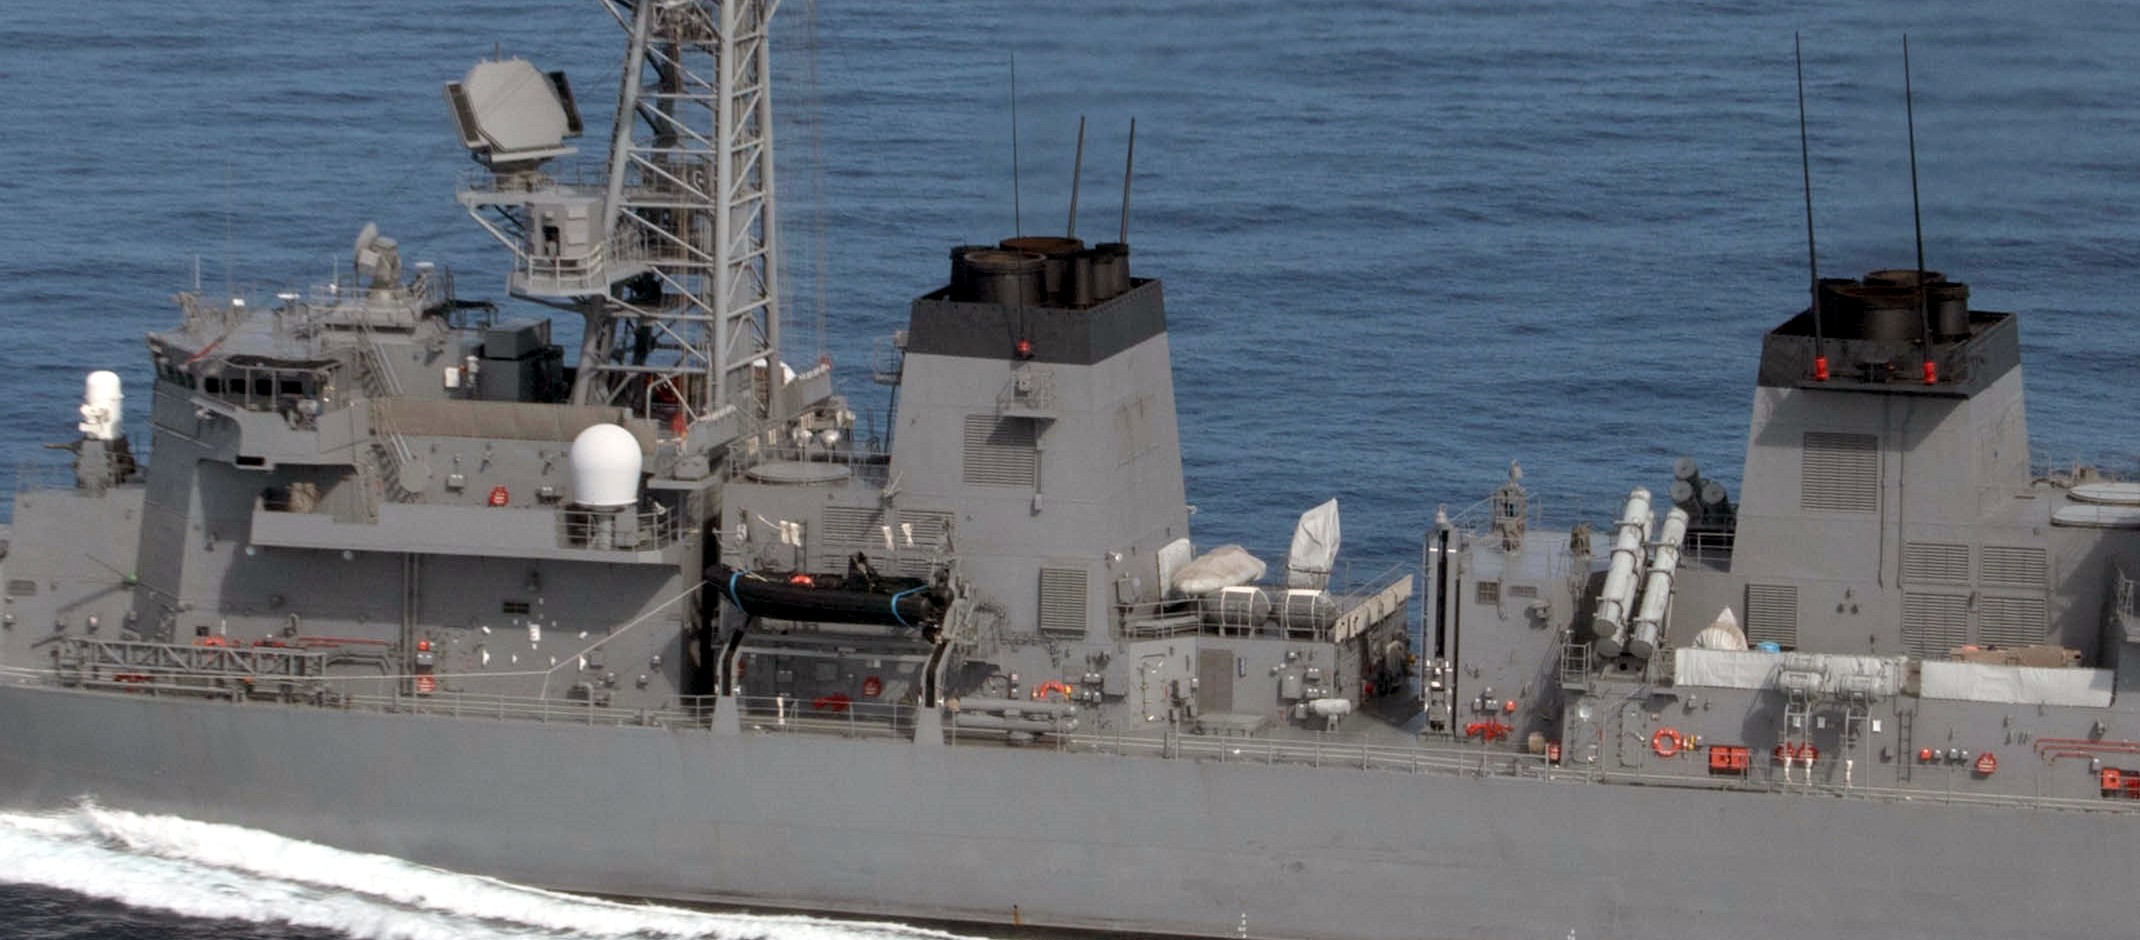 takanami class destroyer japan maritime self defense force jmsdf superstructure armament details 07